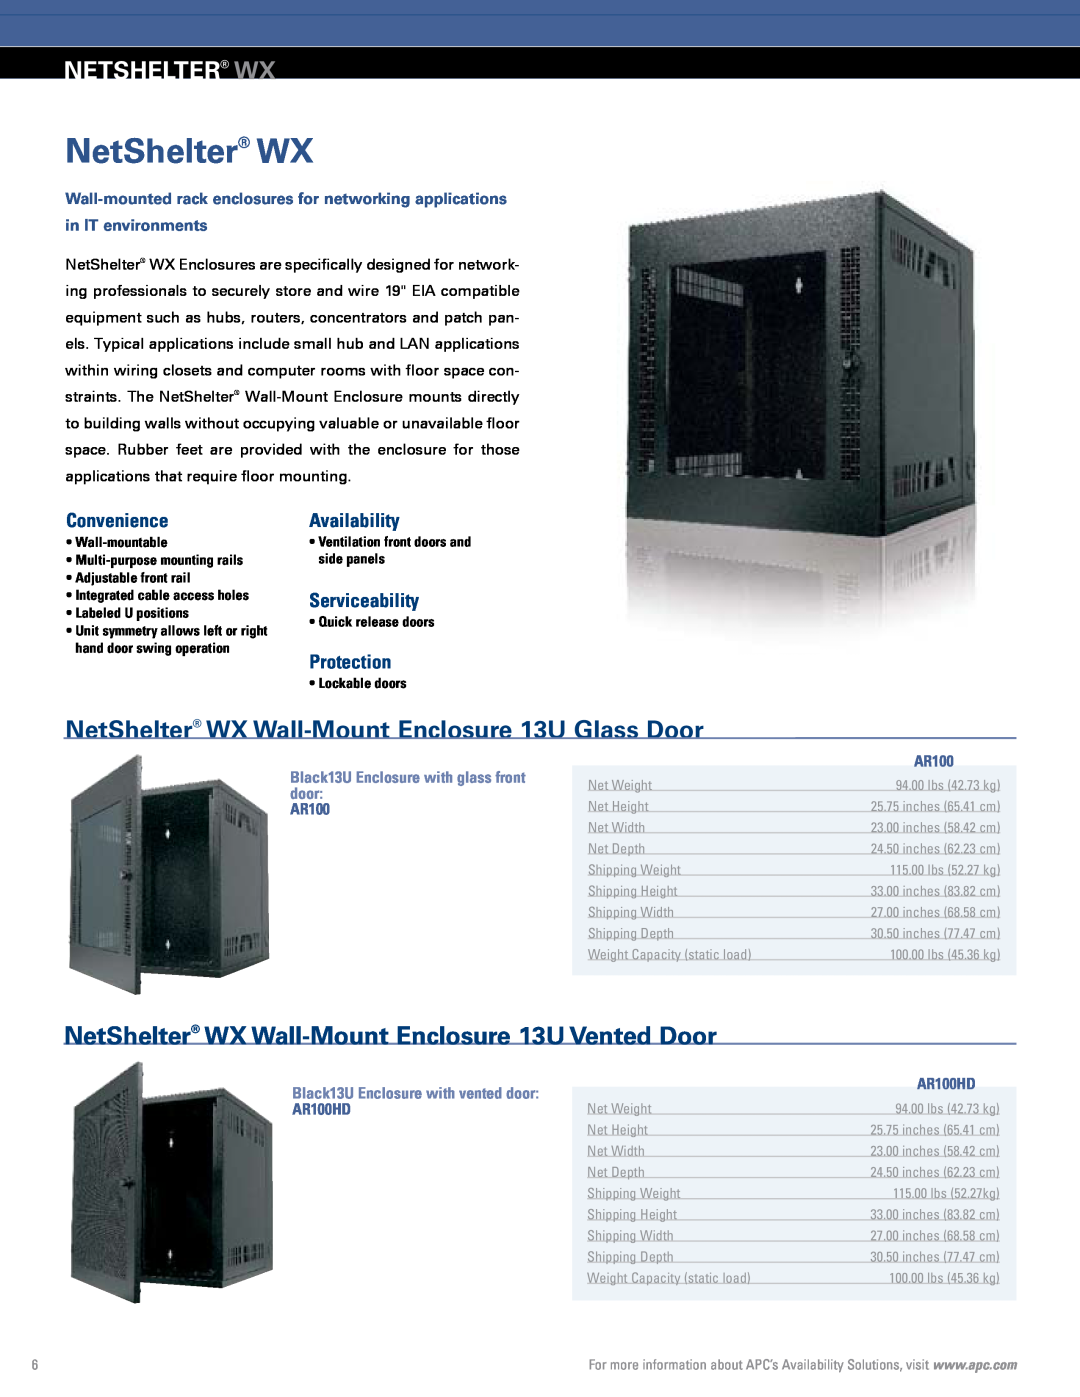 APC Rack Systems netshelter WX, NetShelter WX Wall-MountEnclosure 13U Glass Door, Availability, AR100HD, Convenience 